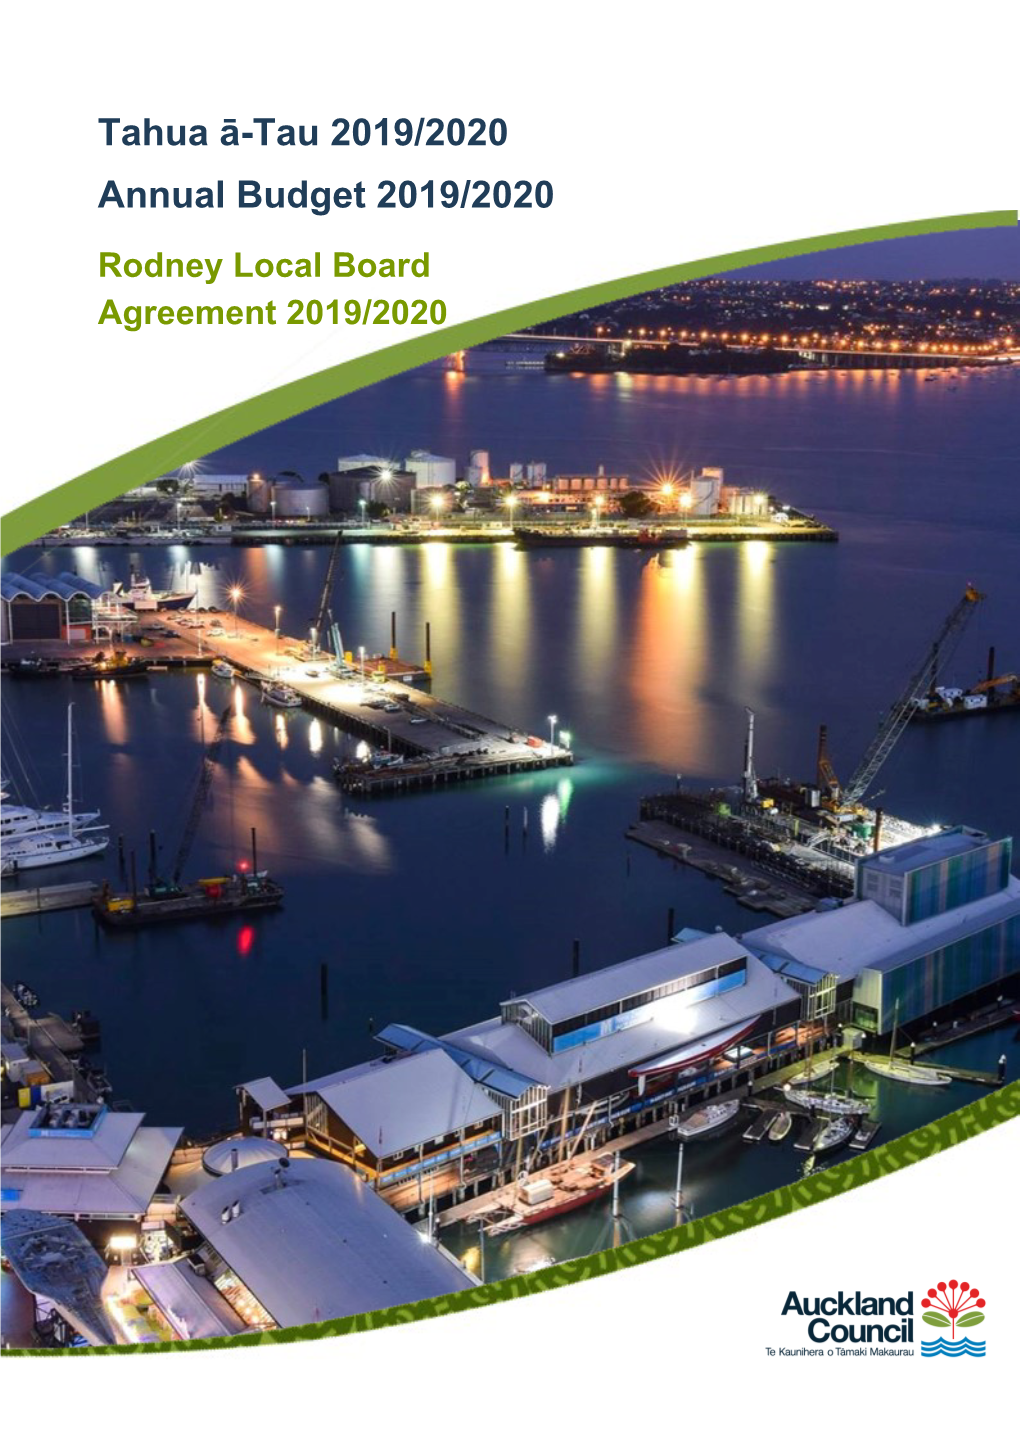 Rodney Local Board Agreement 2019/2020